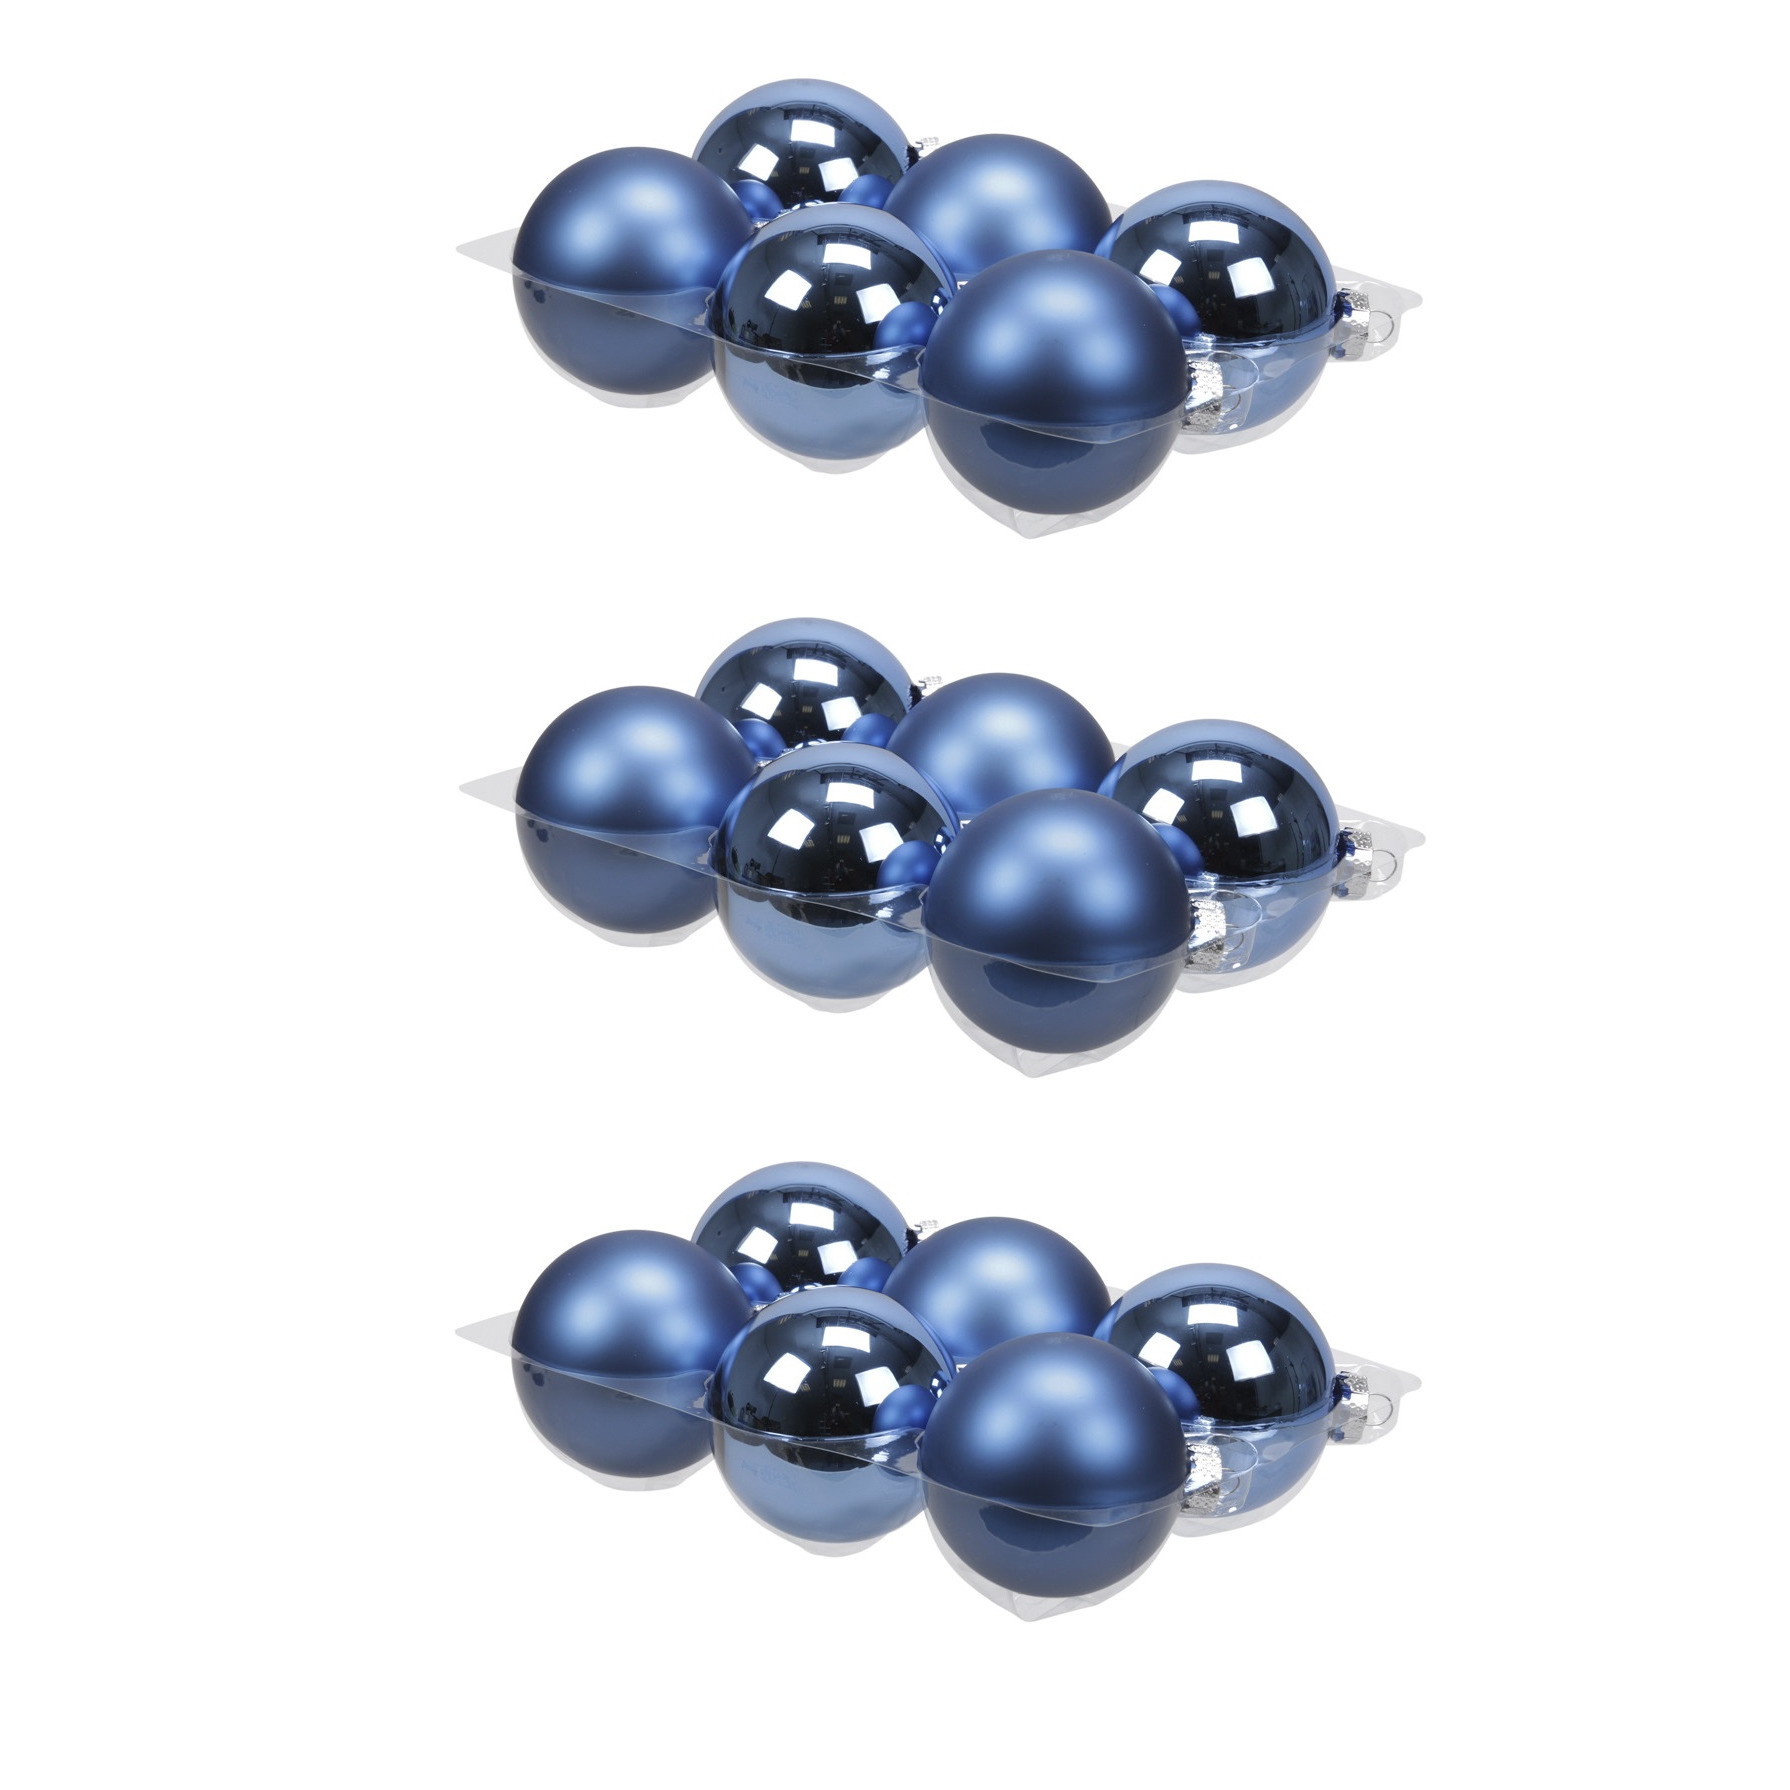 18x stuks glazen kerstballen blauw (basic) 8 cm mat-glans